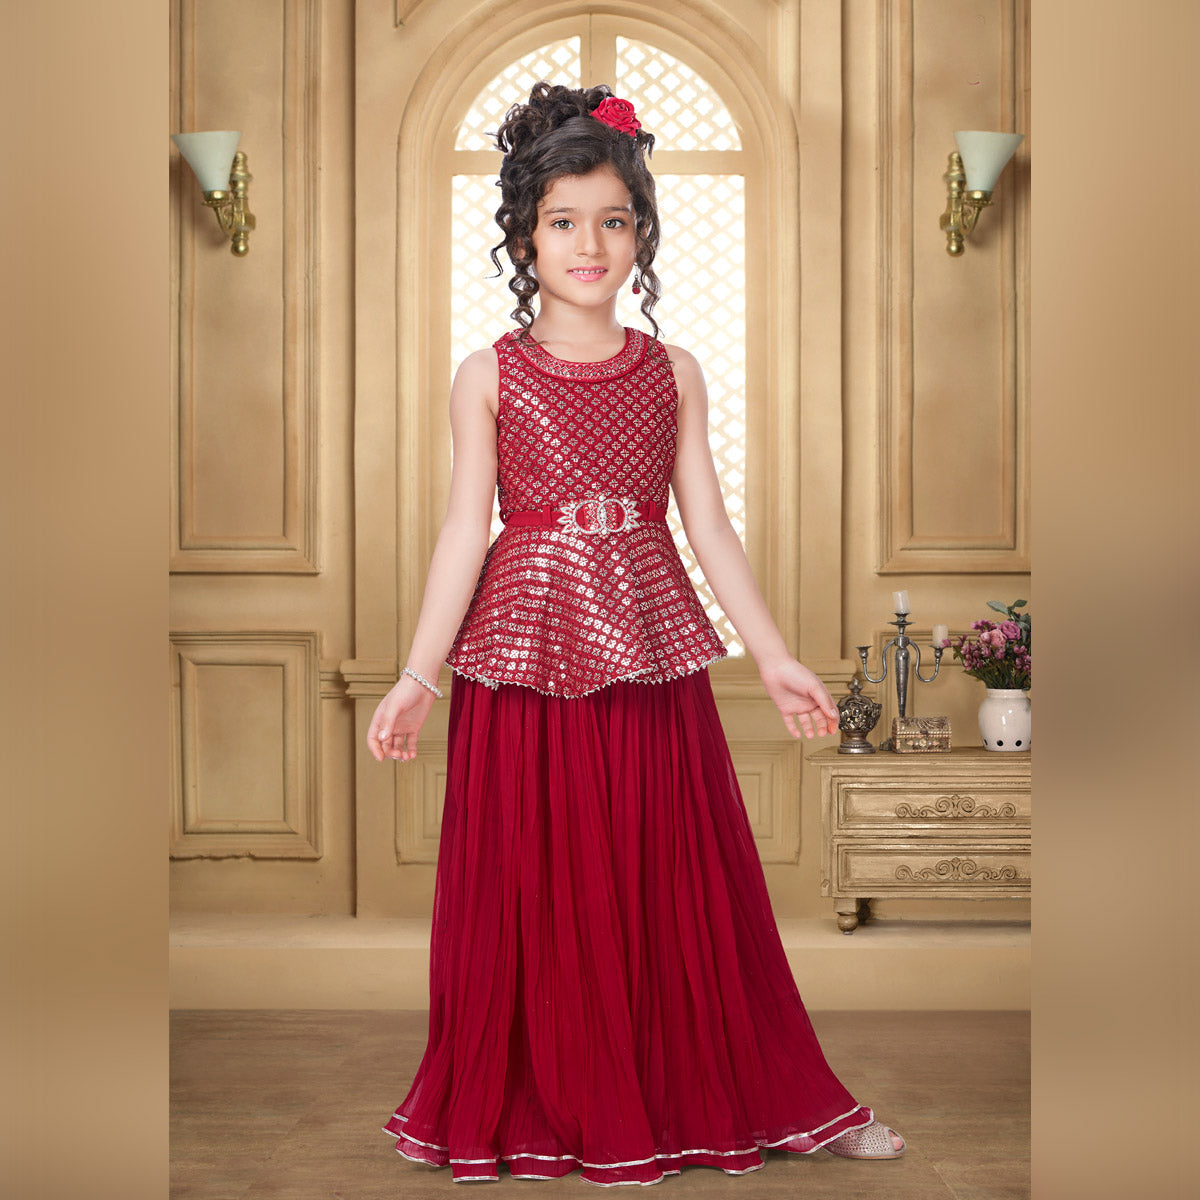 Glamorous Readymade Formal Wear For Women & Girls Grey Kurta Plazo Salwar  Kameez | eBay